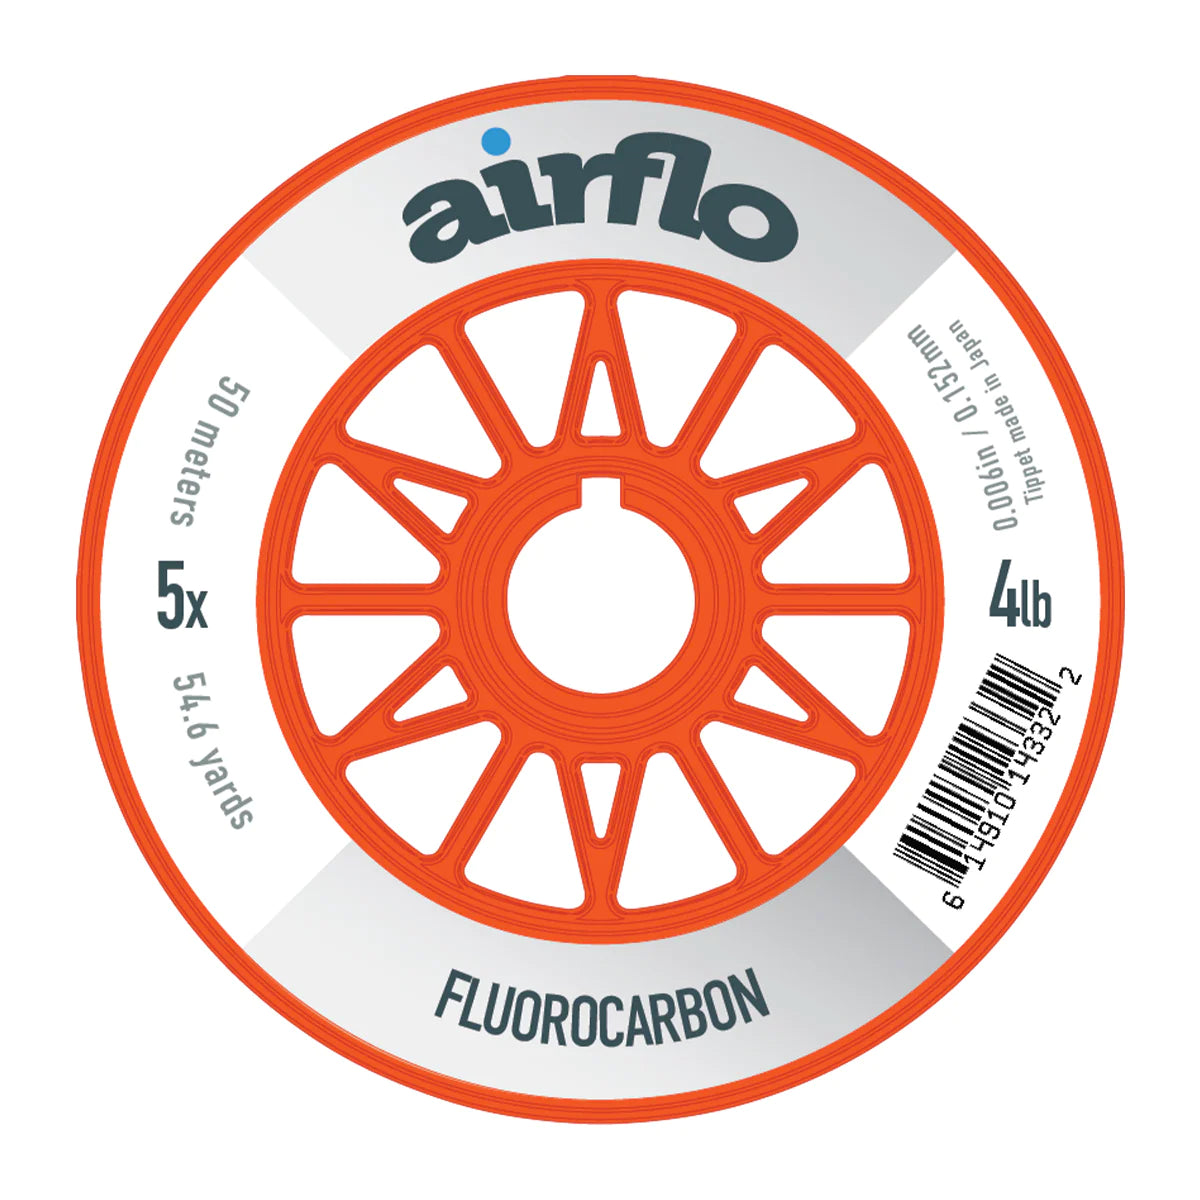 Airflo Fluorocarbon Tippet